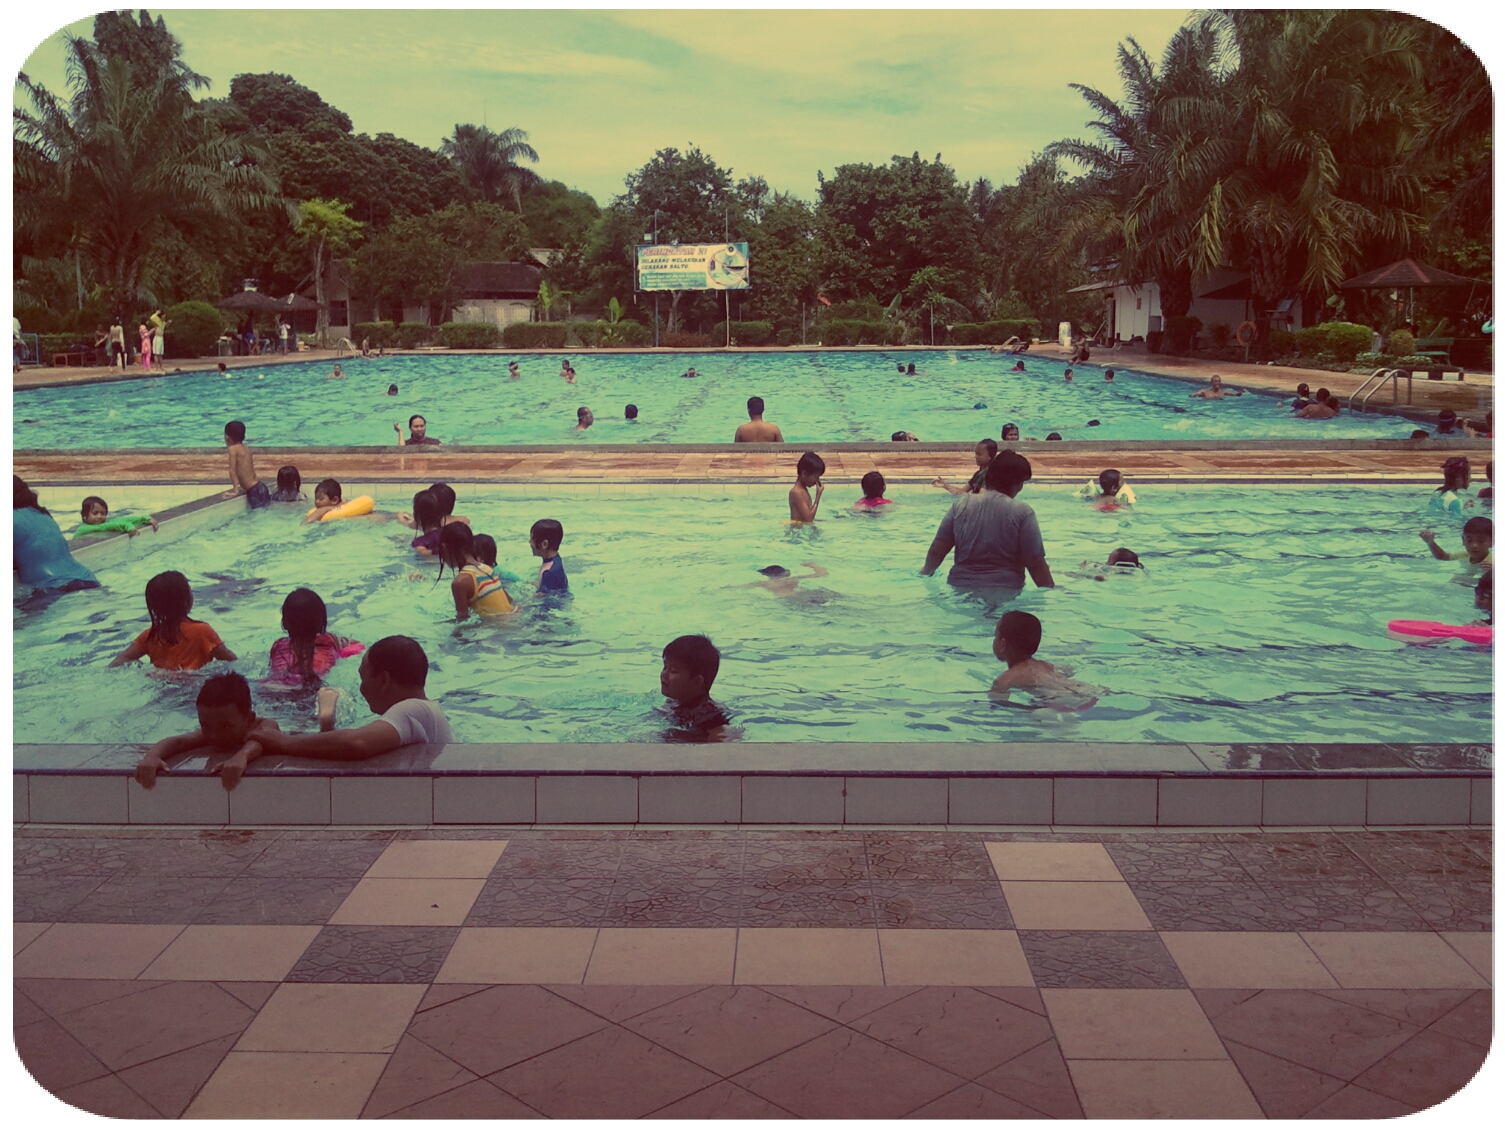 Public pool